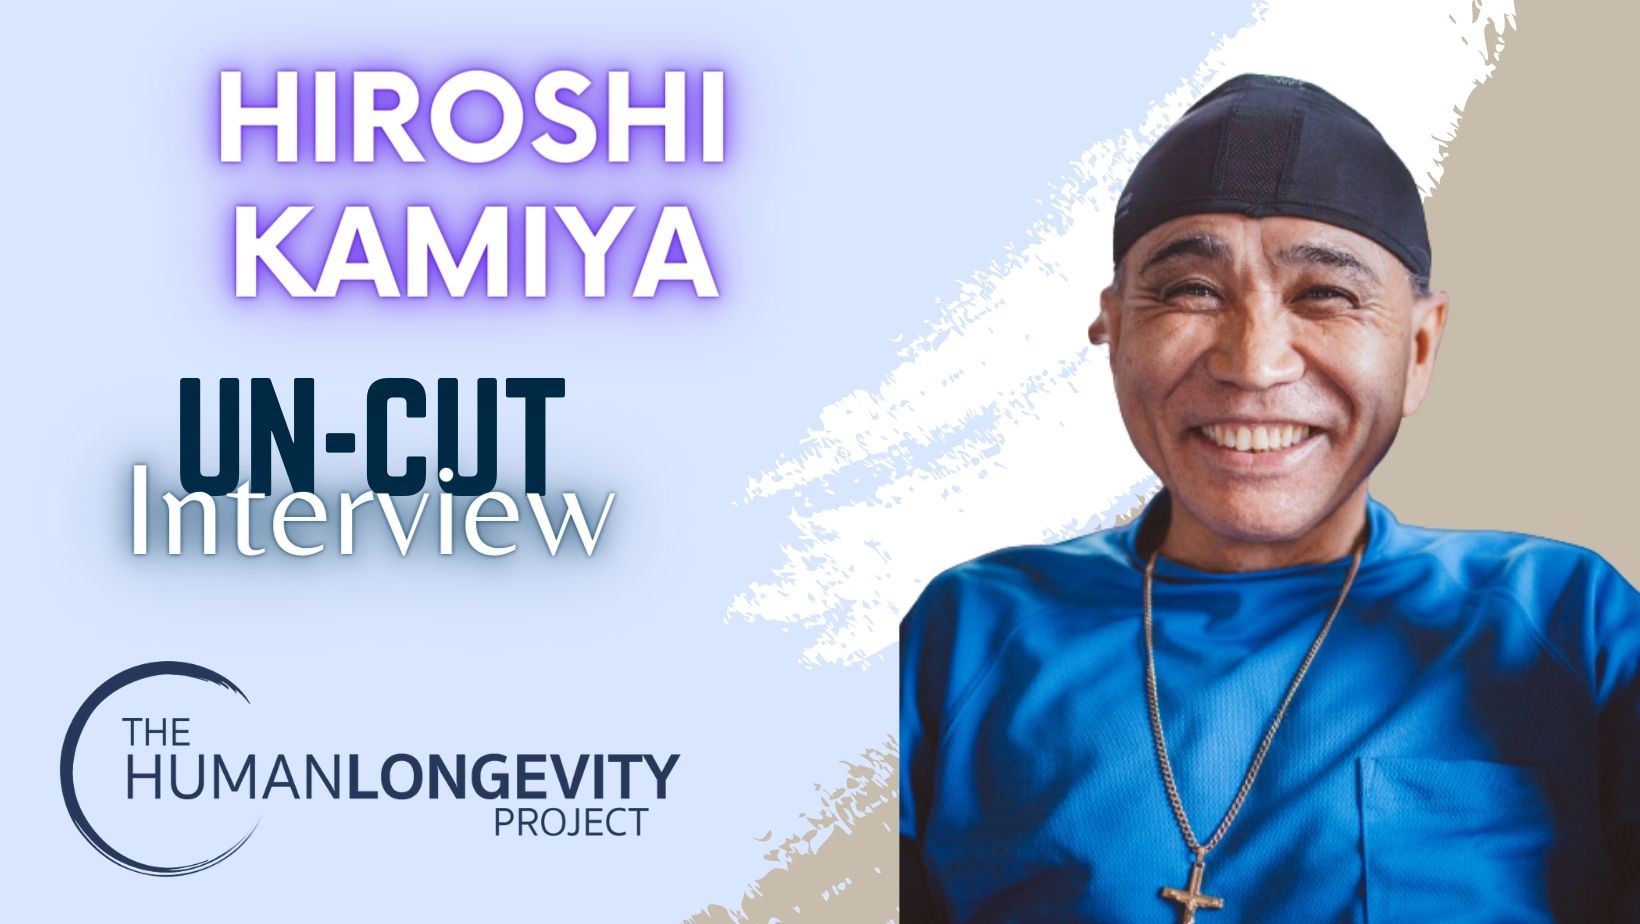 Human Longevity Project Uncut Interview With Hiroshi Kamiya